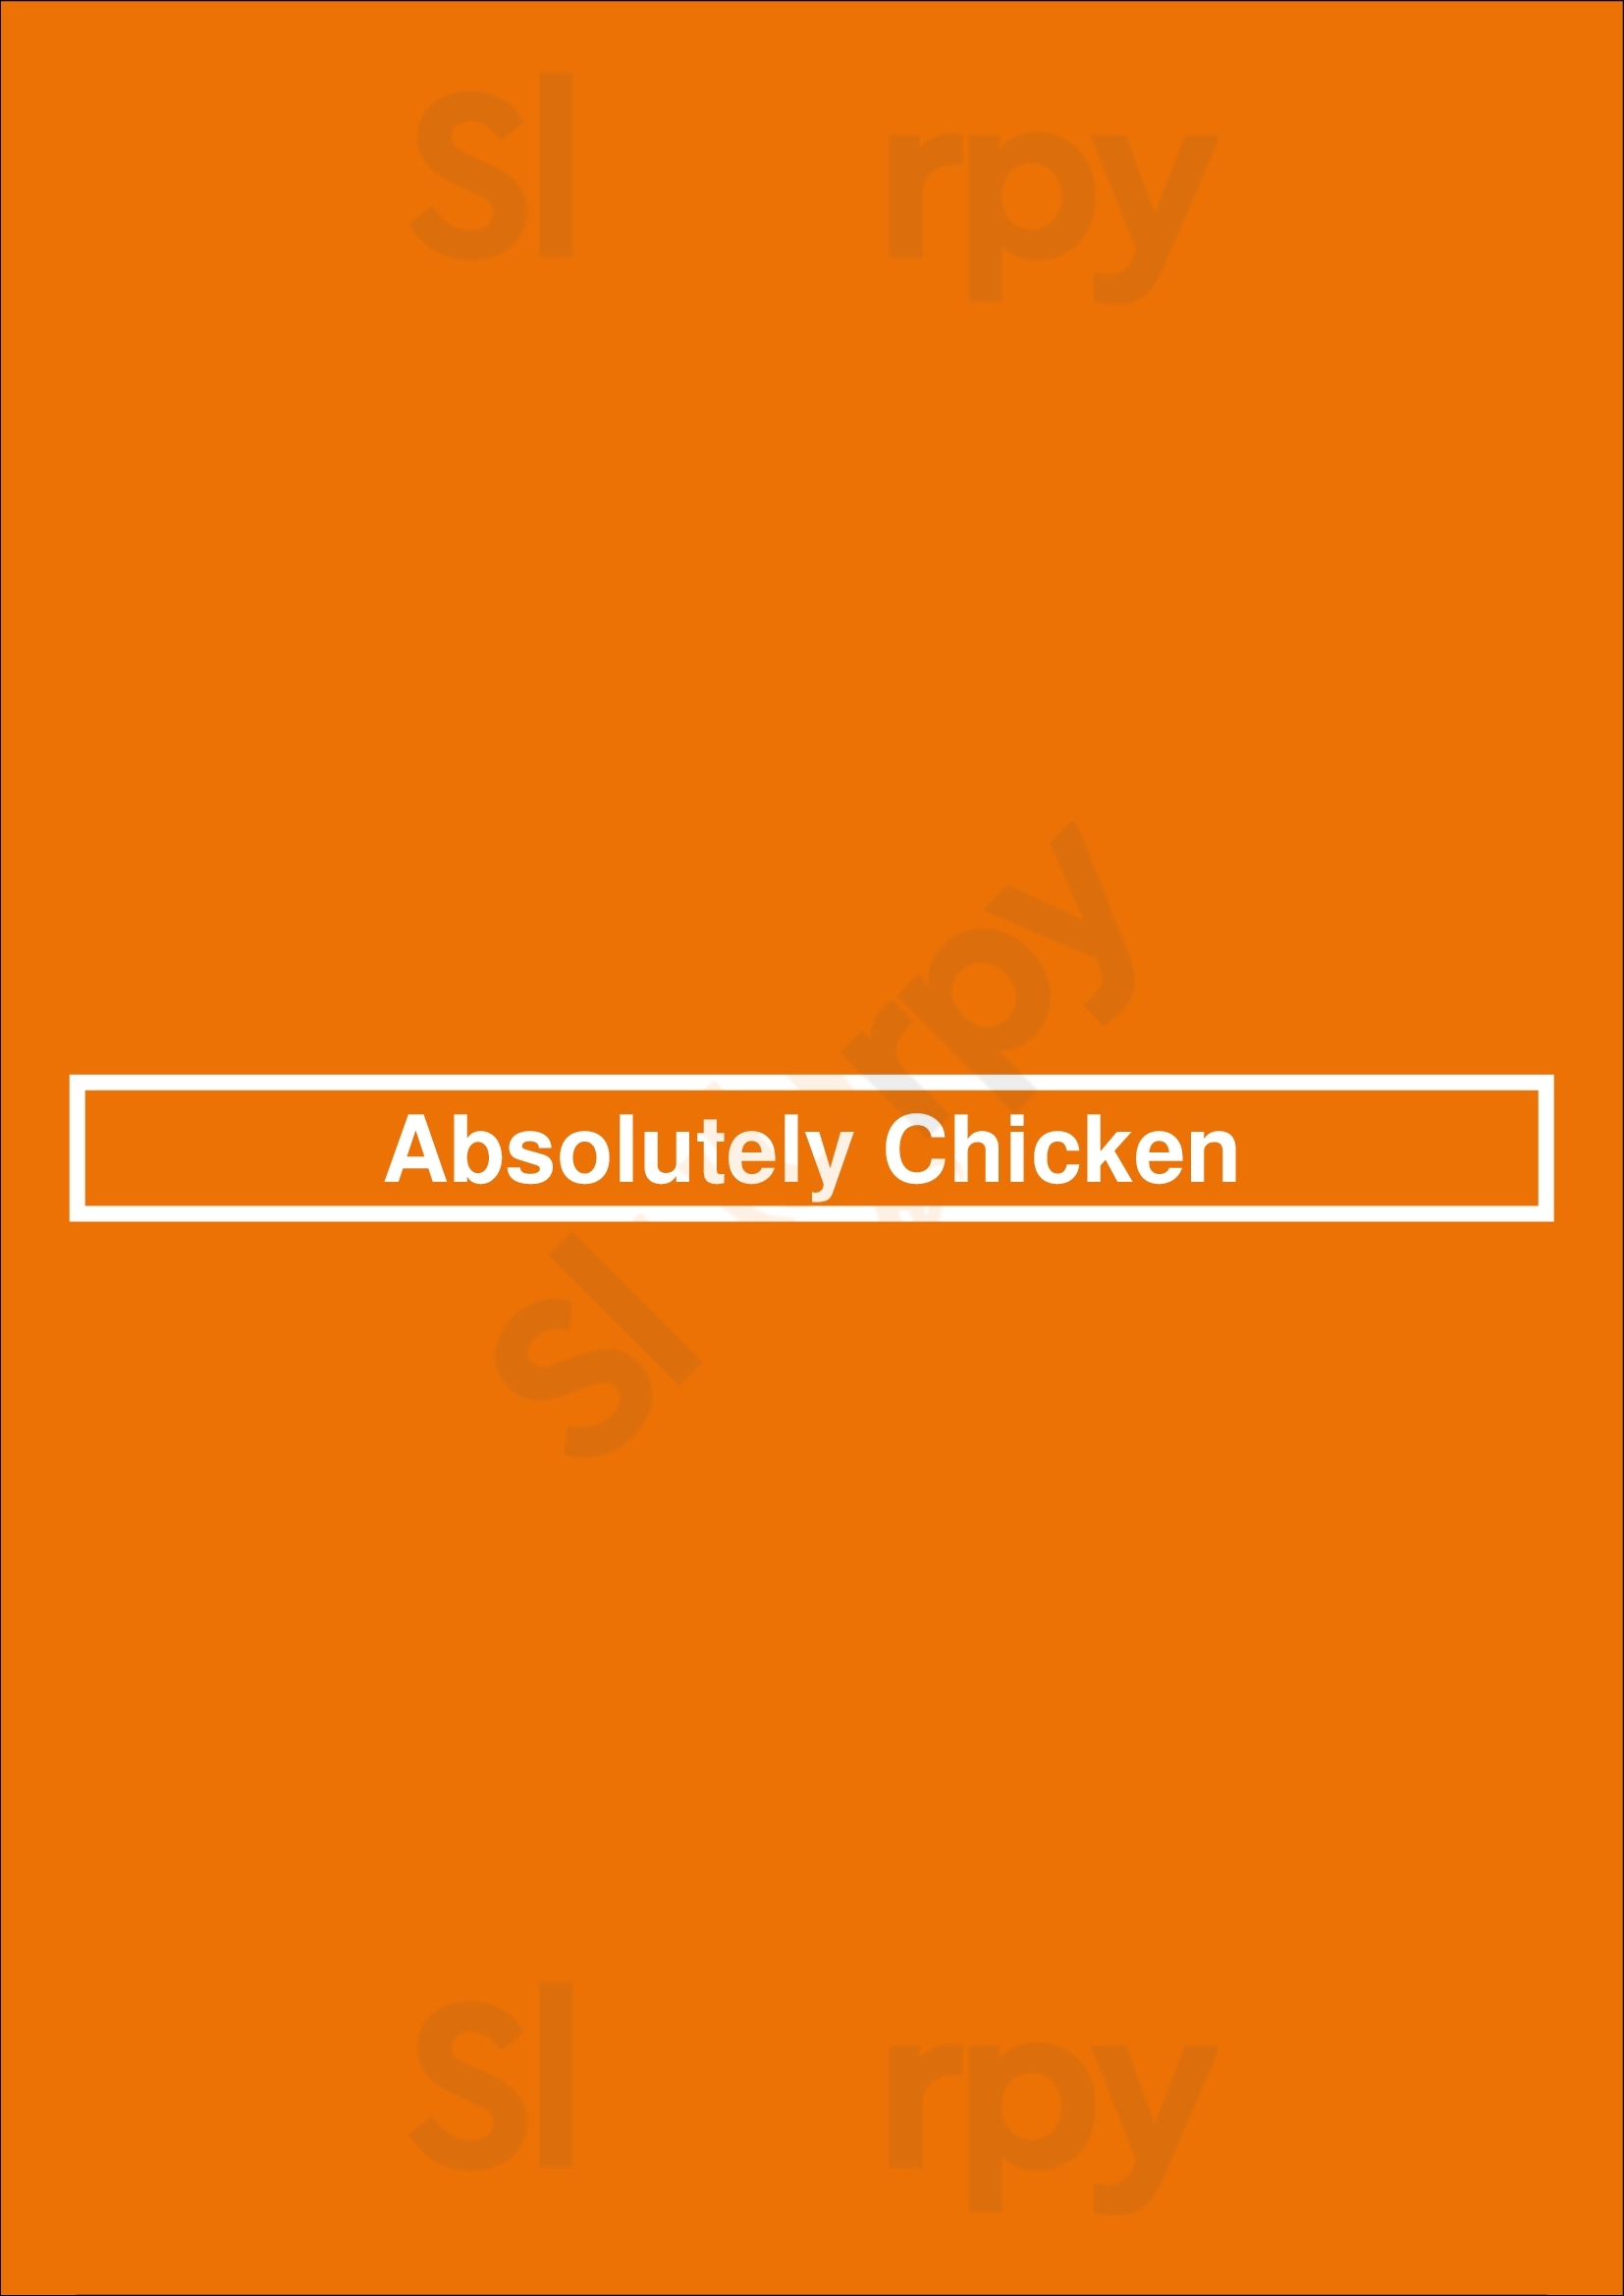 Absolutely Chicken Belfast Menu - 1